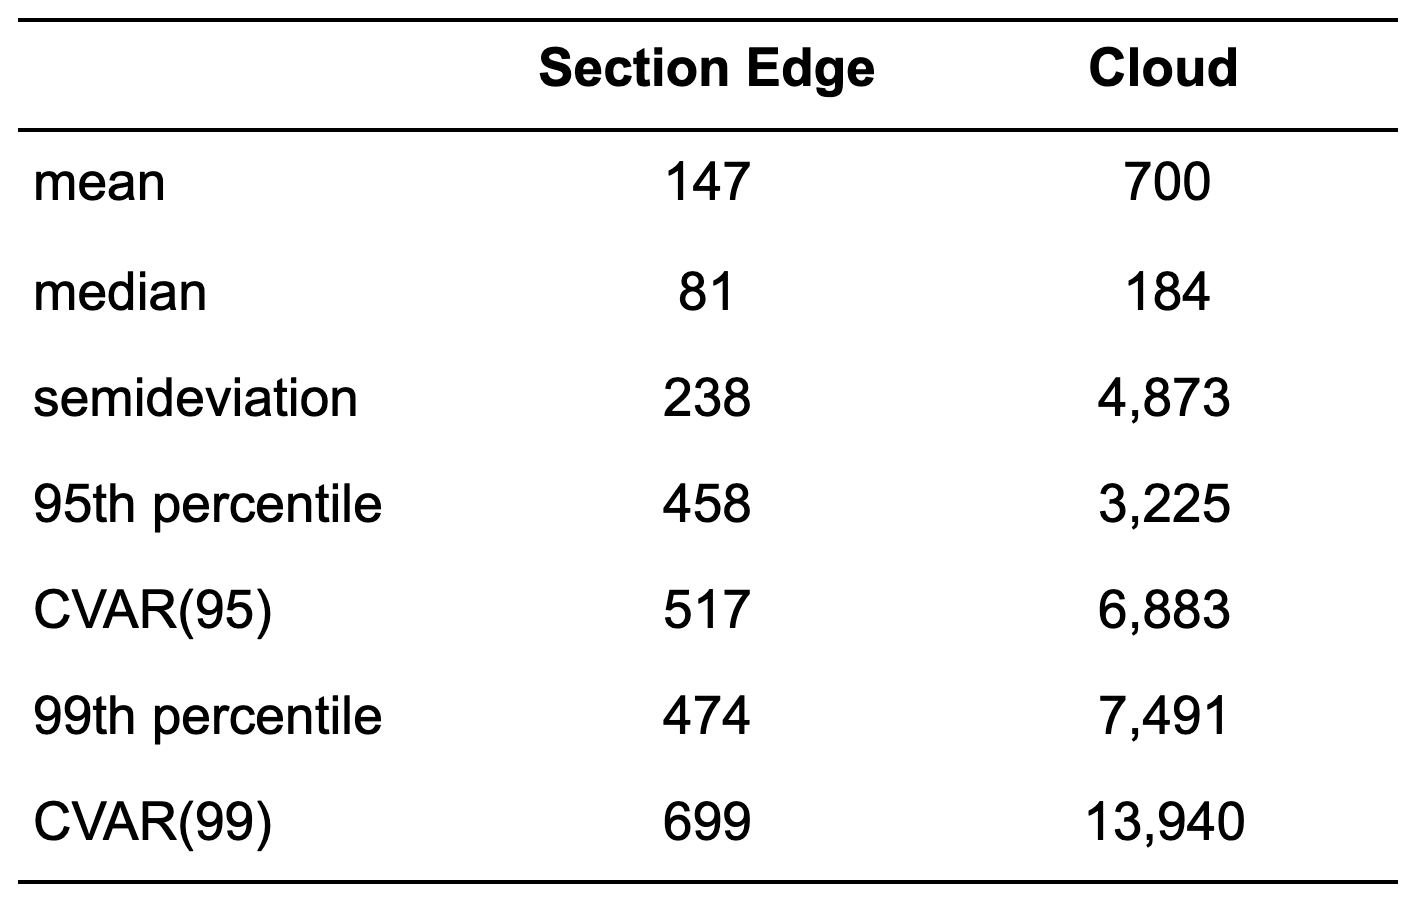 AEE vs Cloud results